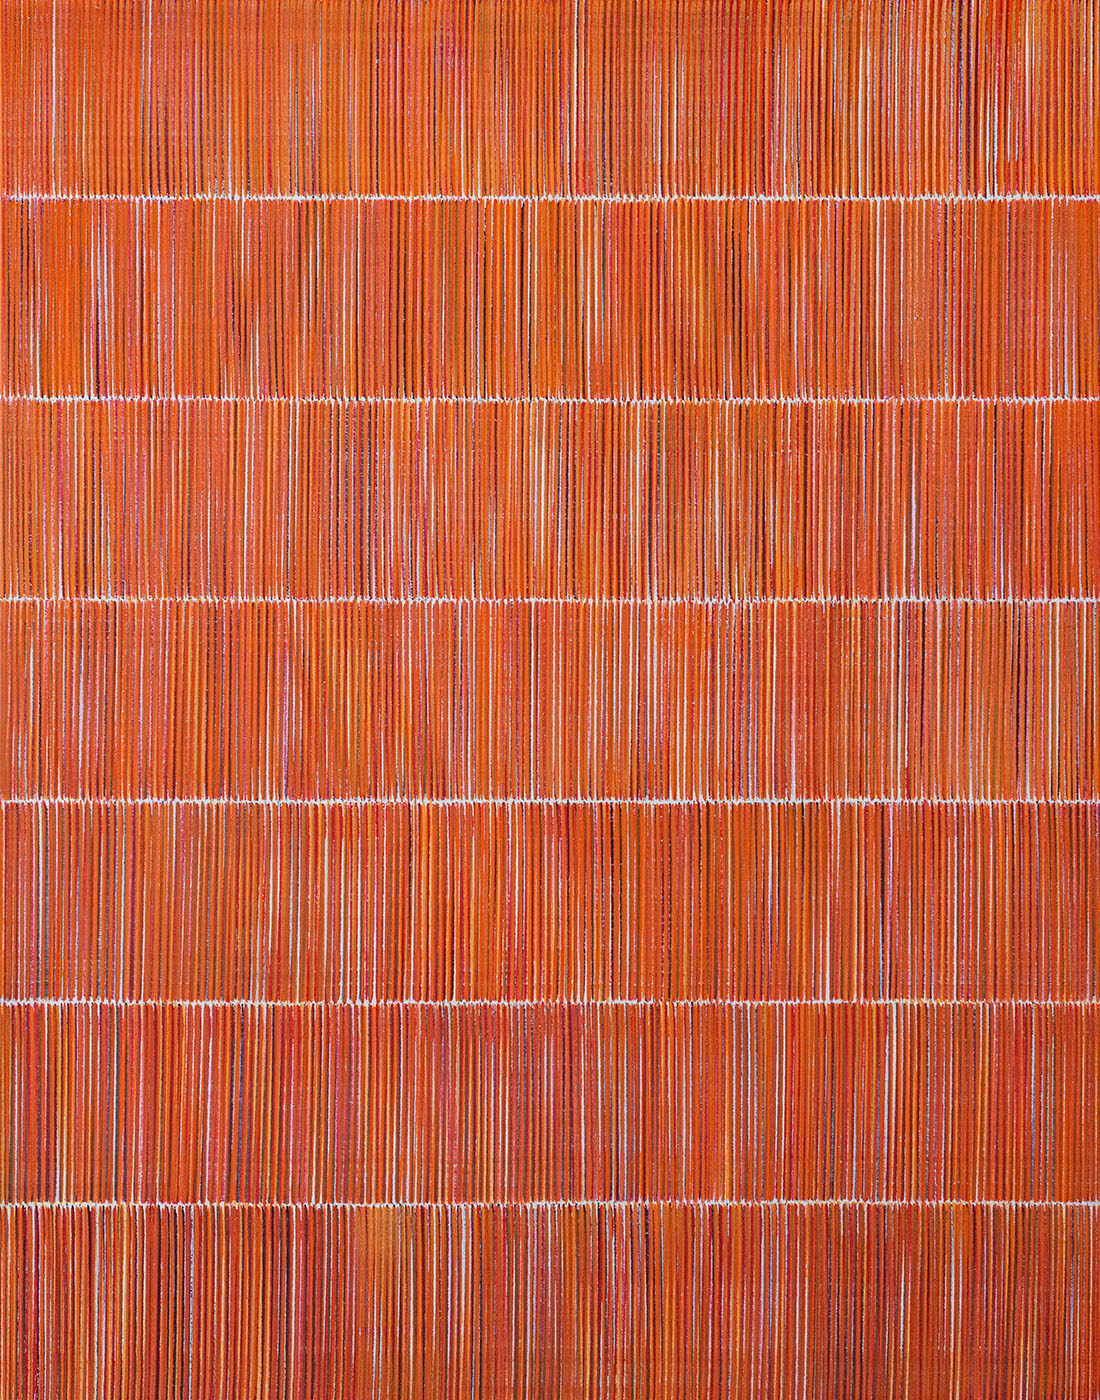 Nikola Dimitrov, KlangRaumRot VI, 2020, Pigmente, Bindemittel auf Leinwand, 140 x 110 cm